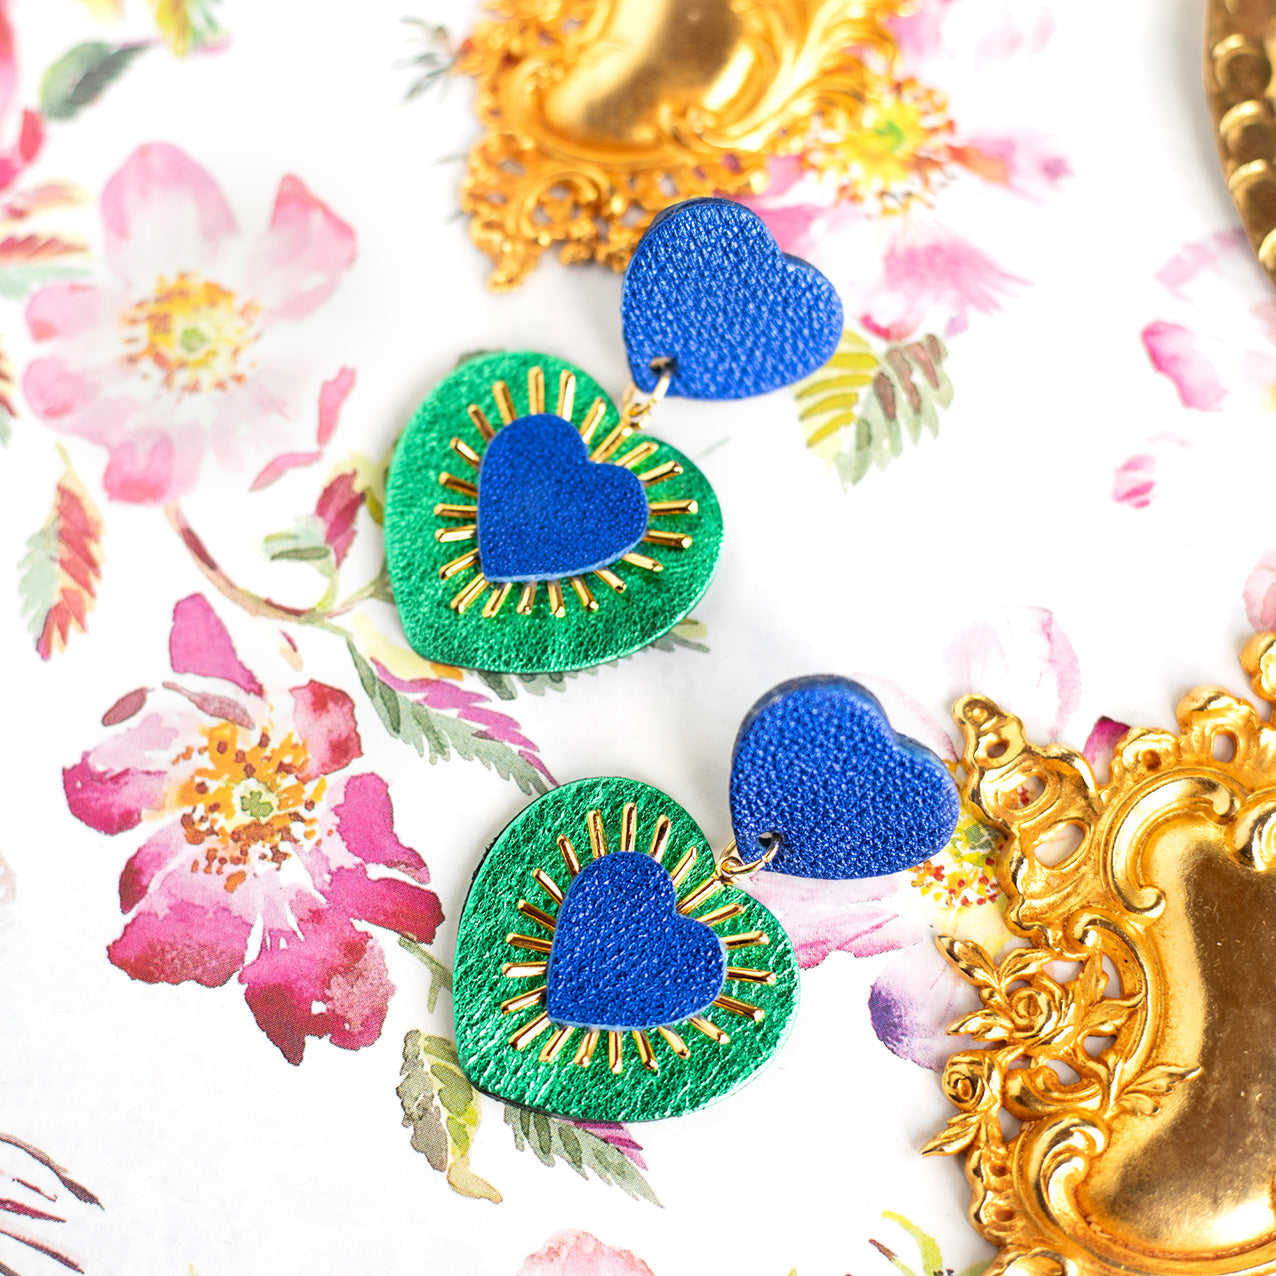 Sacré Coeur earrings in ultramarine blue and metallic green leather